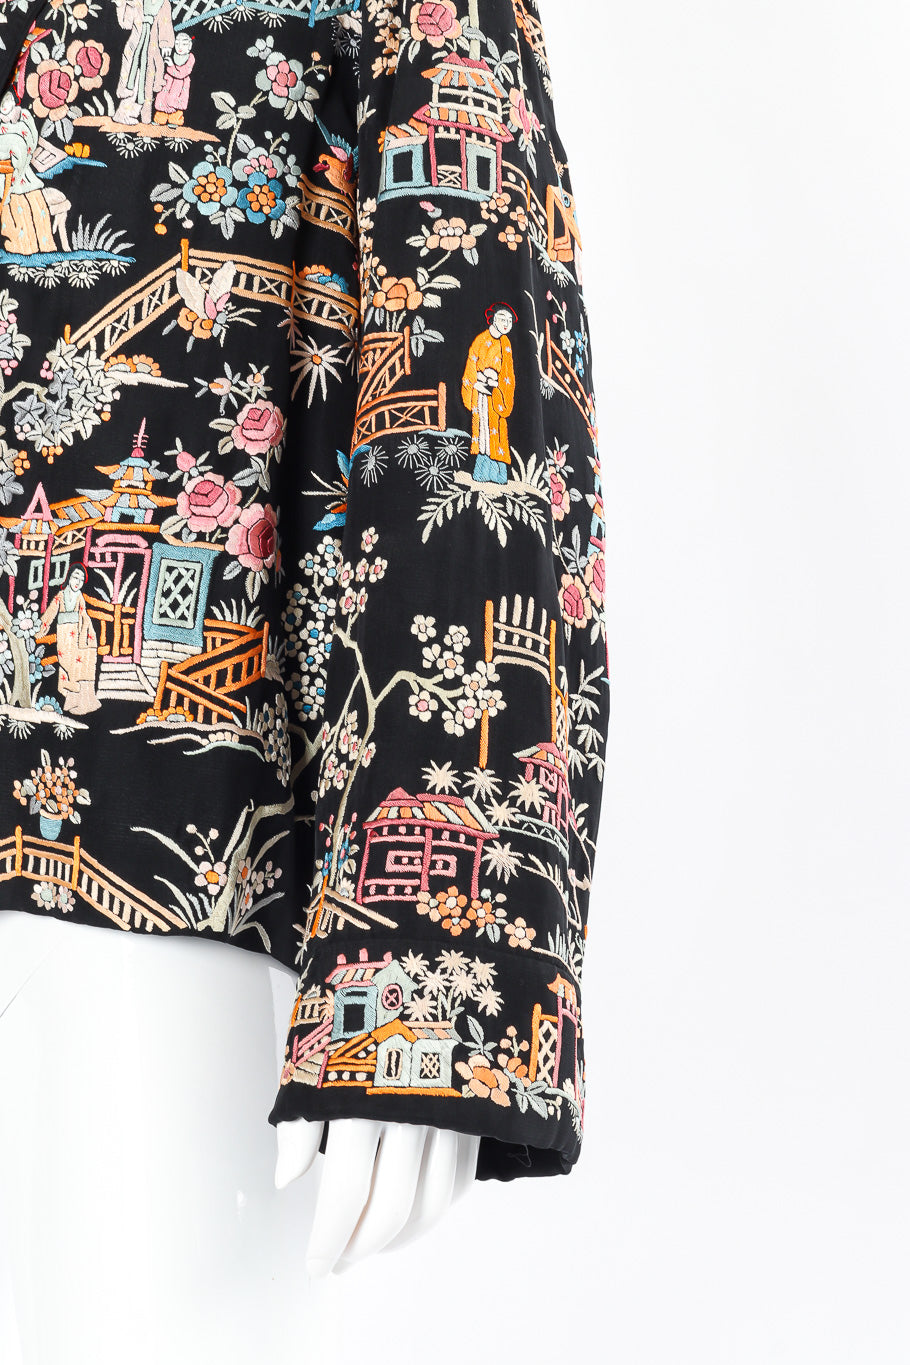 Embroidered silk multi-color jacket sleeve fabric  detail @recessla